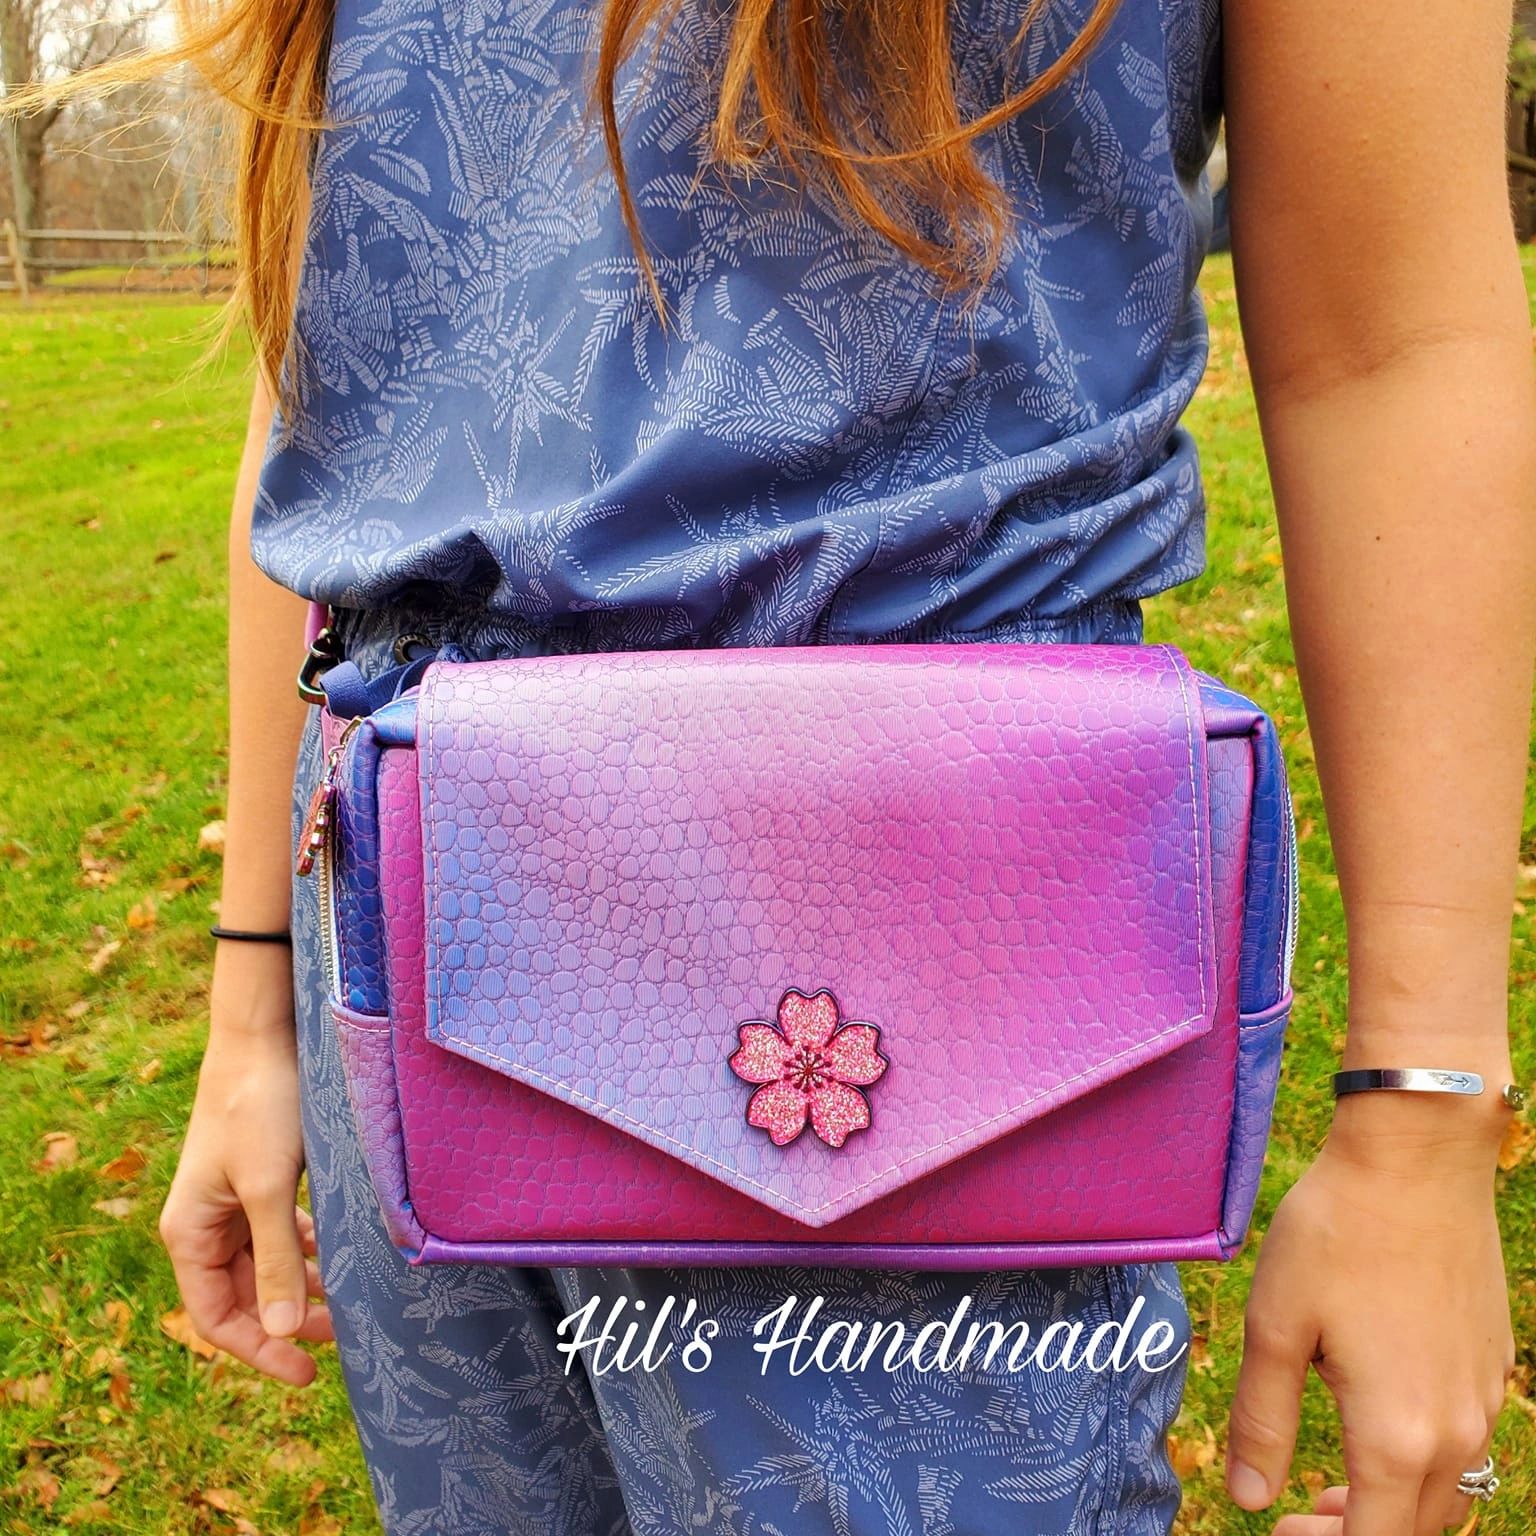 Hil's Handmade - Purses, Custom Made Bags